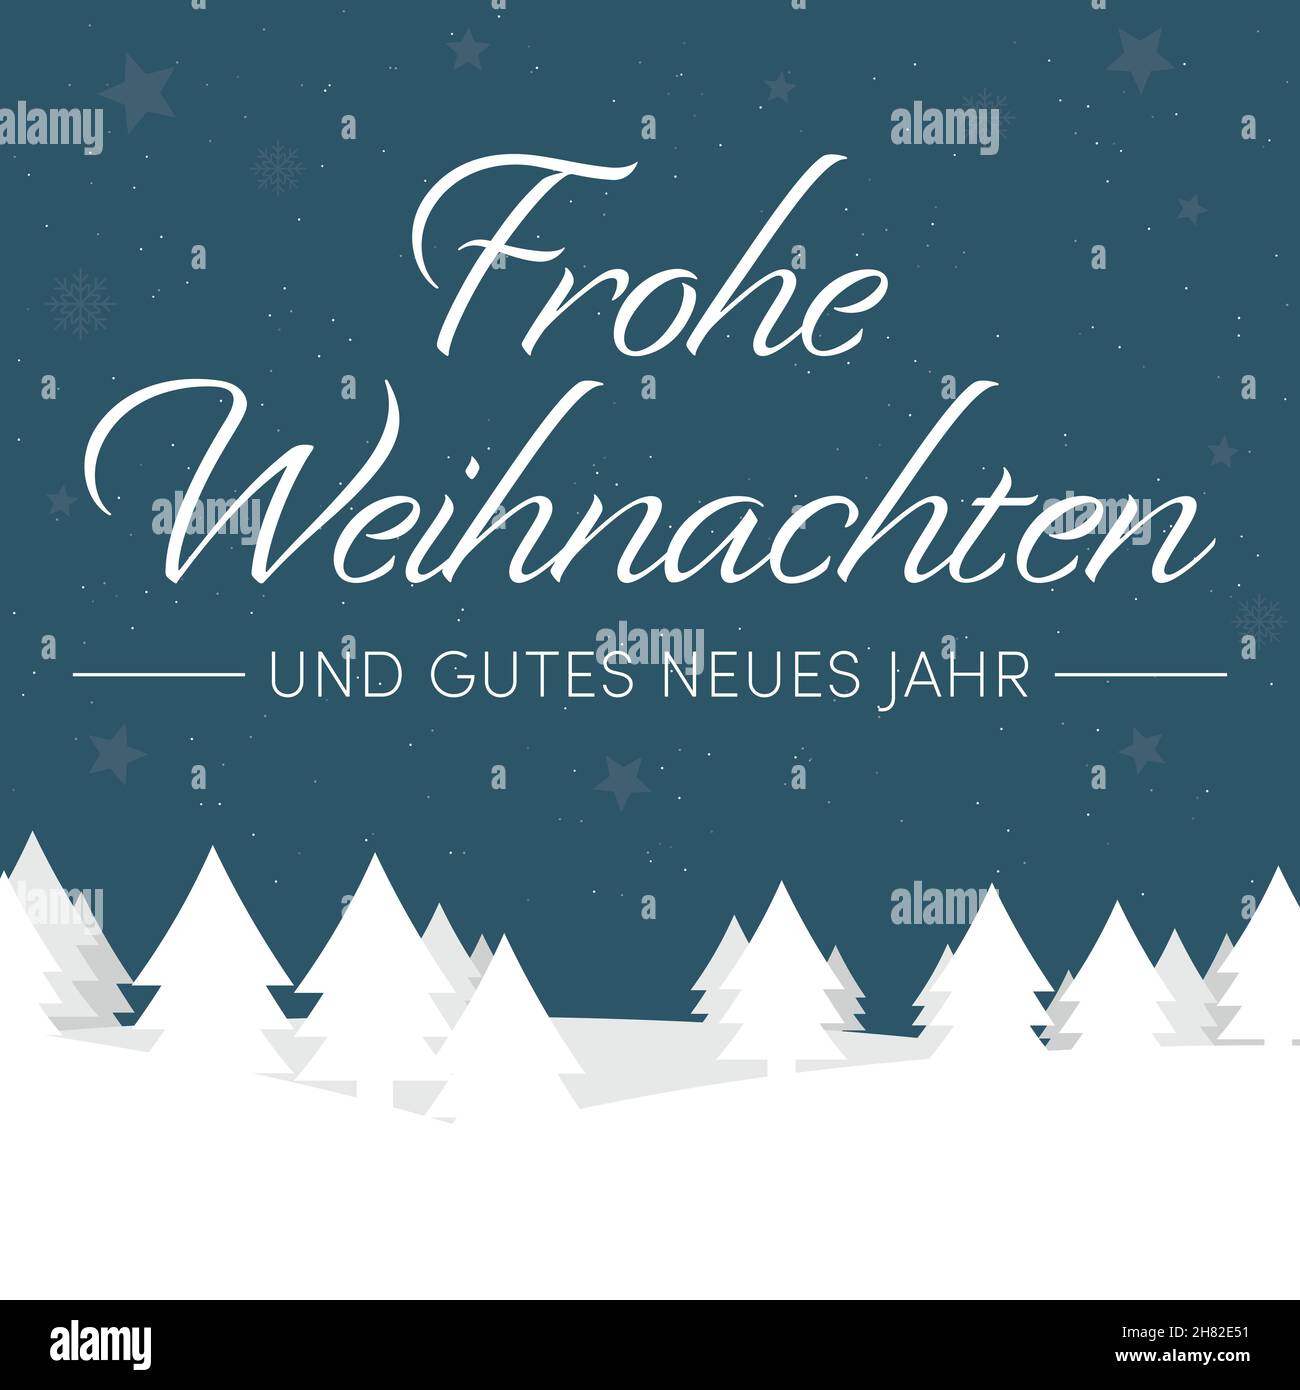 Frohe Weihnachten und gutes neues Jahr. German language. Translation: Merry Christmas and Happy New Year. Stock Vector